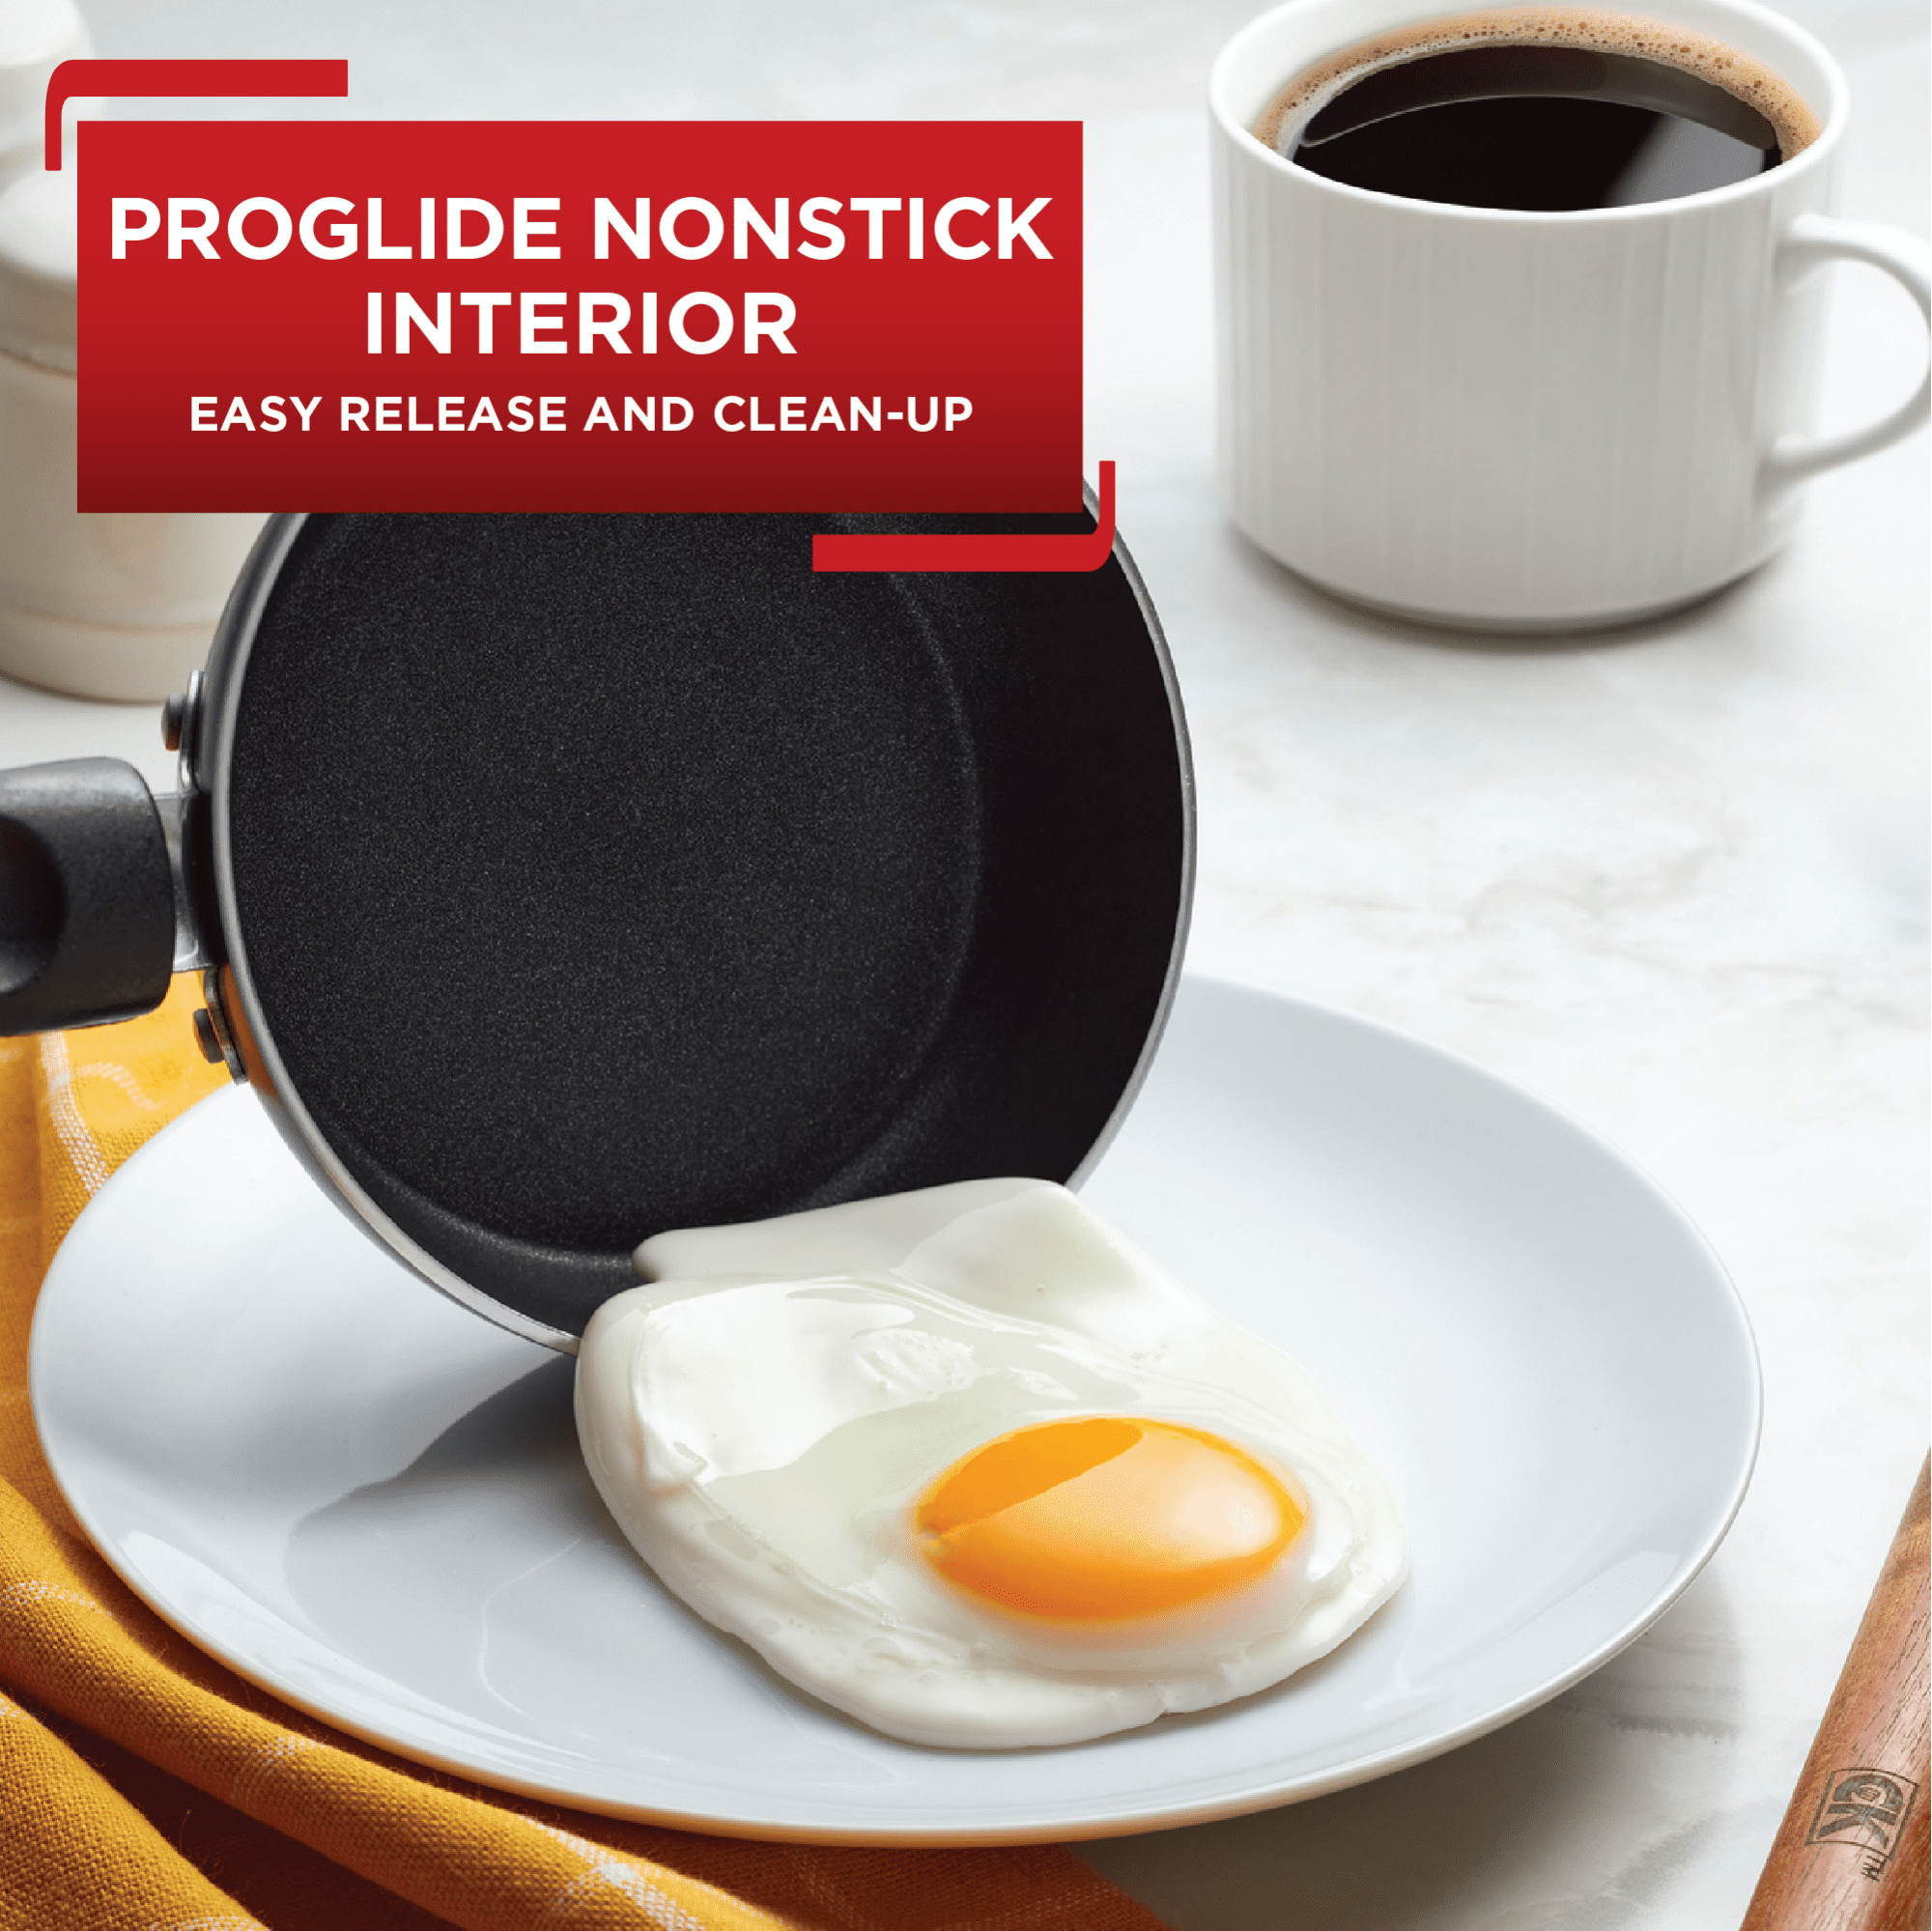 T-Fal® One Egg Wonder Nonstick Pan - Black, 1 ct - Pay Less Super Markets